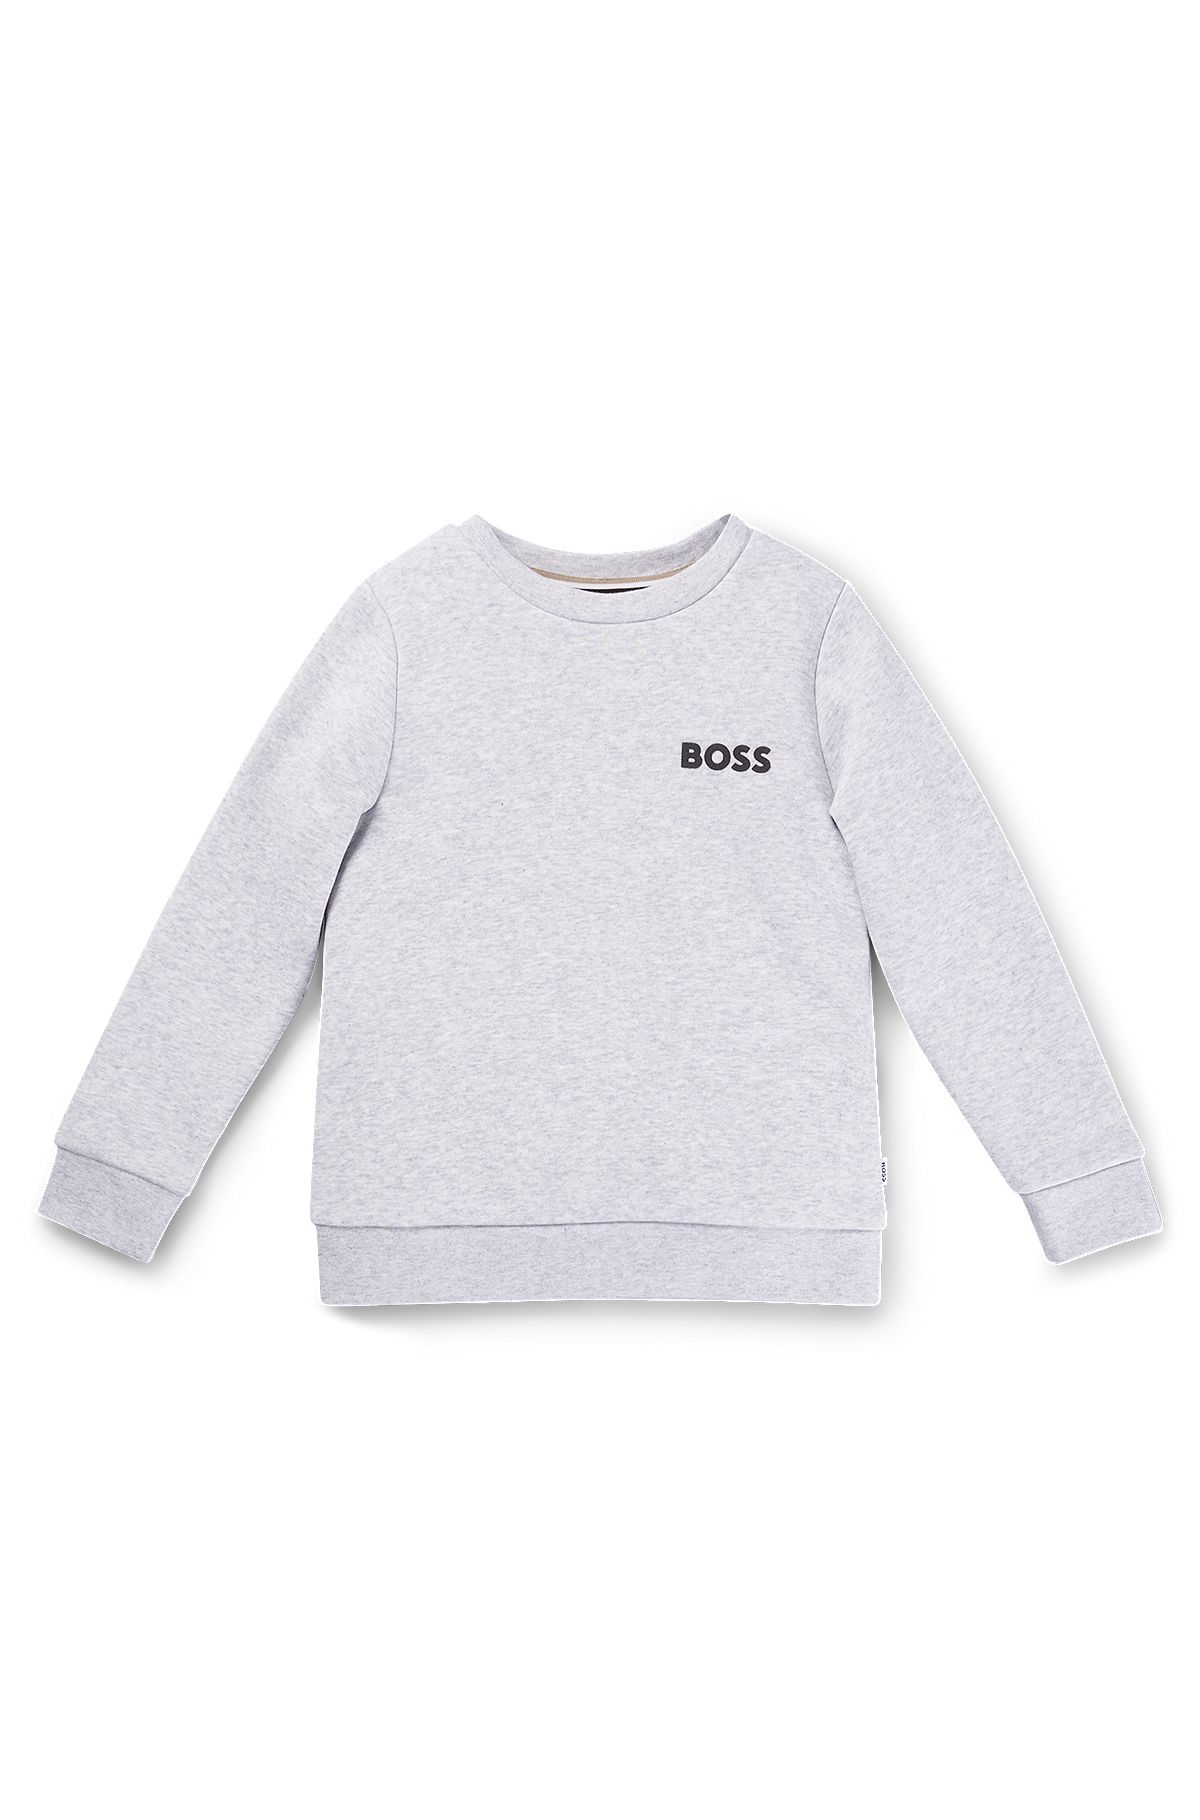 Kids' cotton-blend sweatshirt with logo print, Light Grey